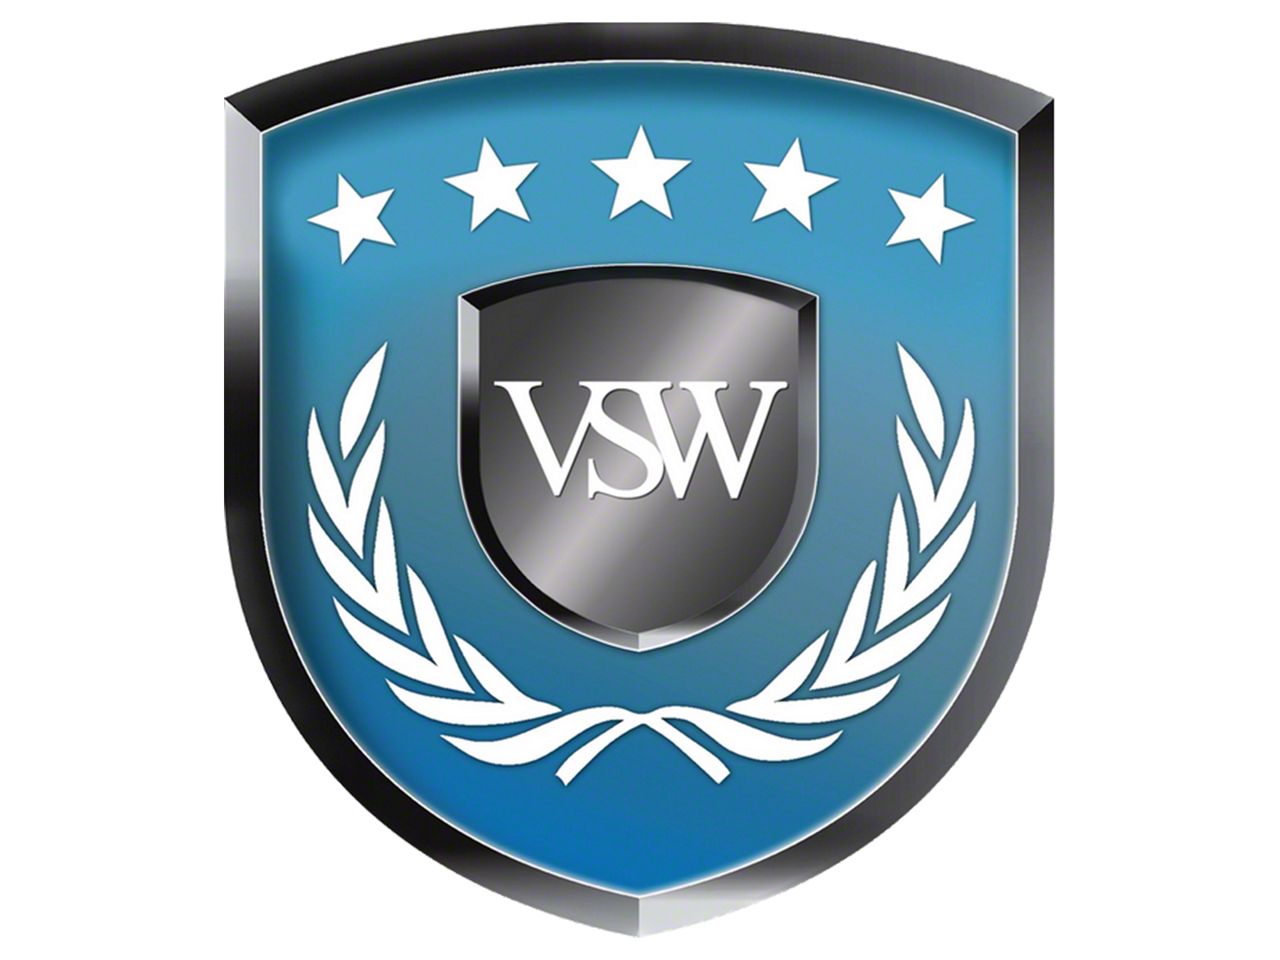 VSW Parts